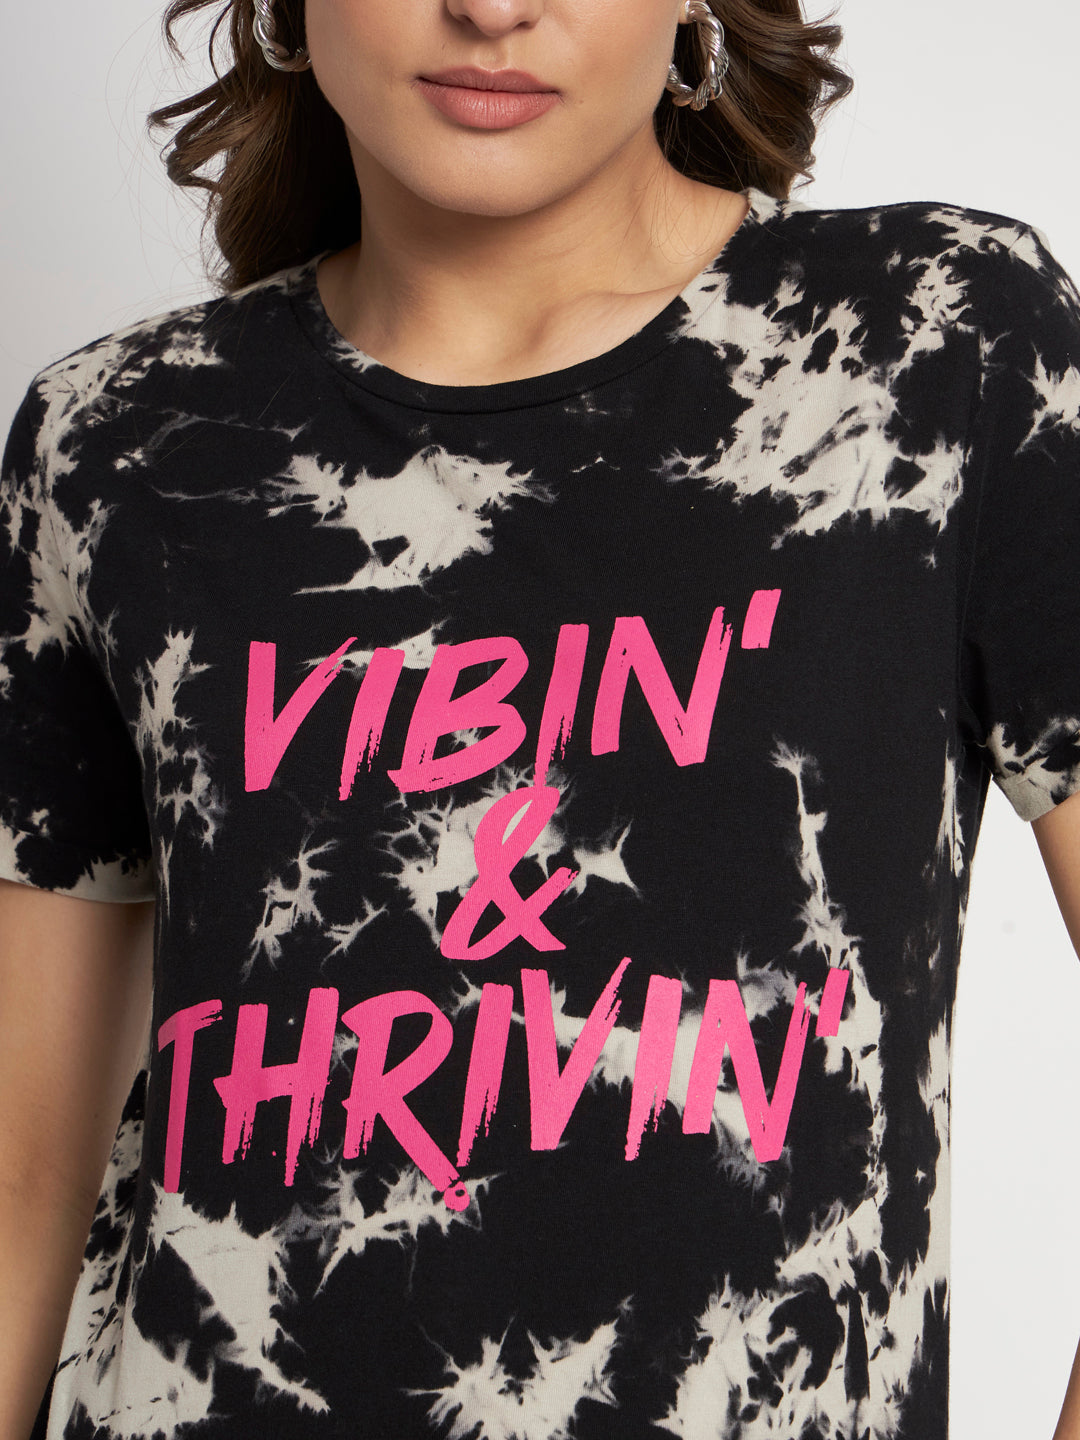 Vibin Thrivin Printed T-Shirt